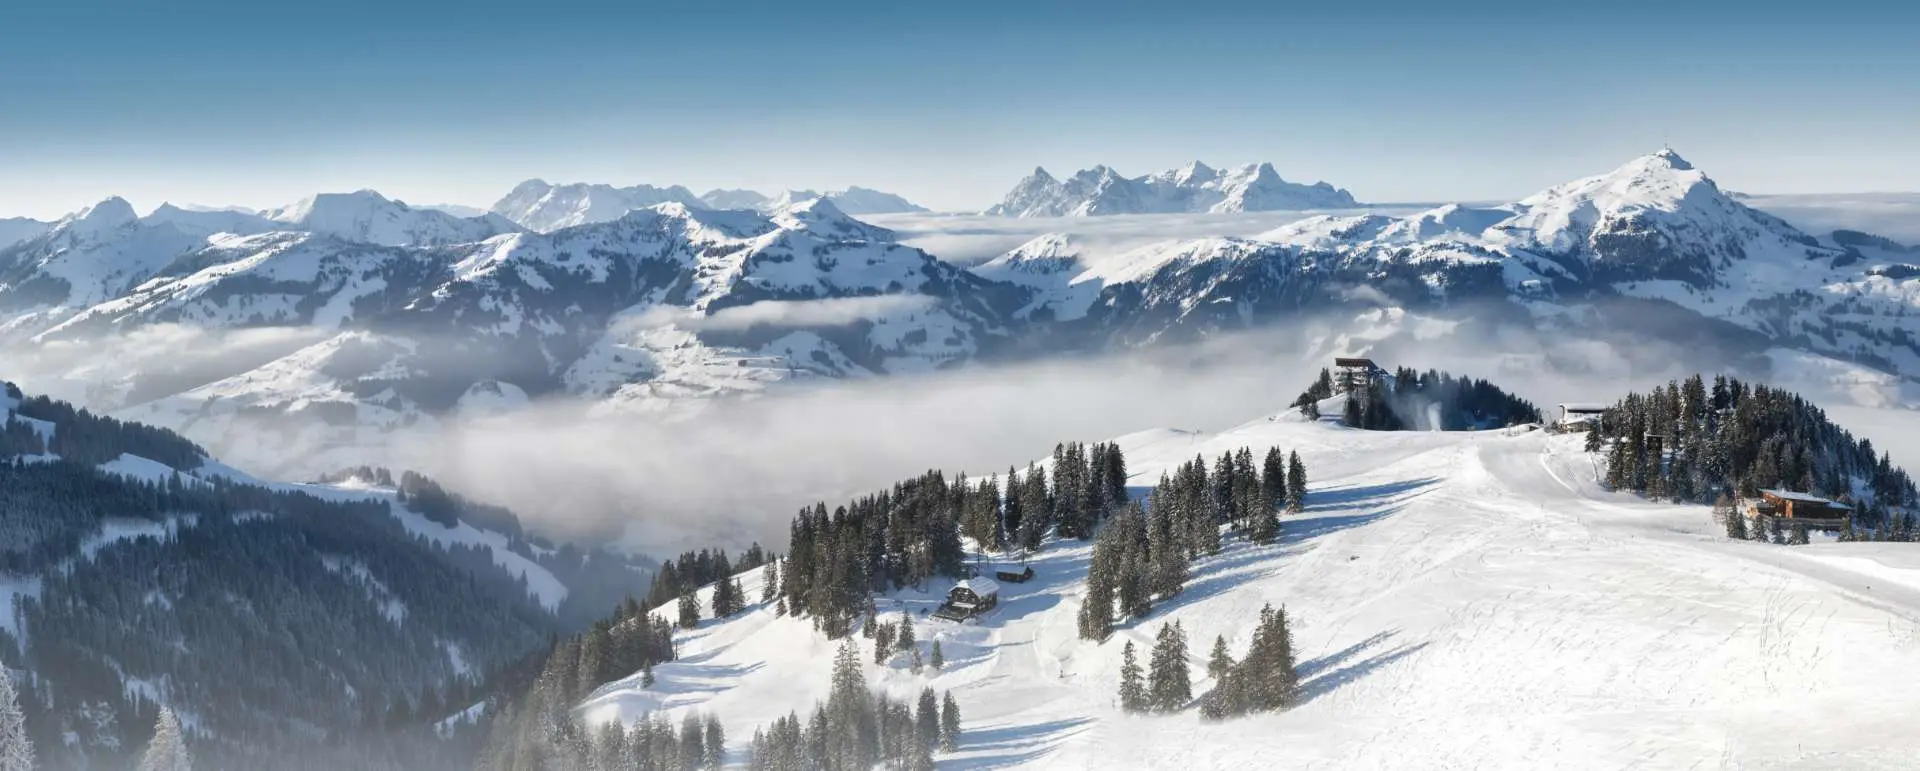 Kitzbühel Alps - the destination for athletes